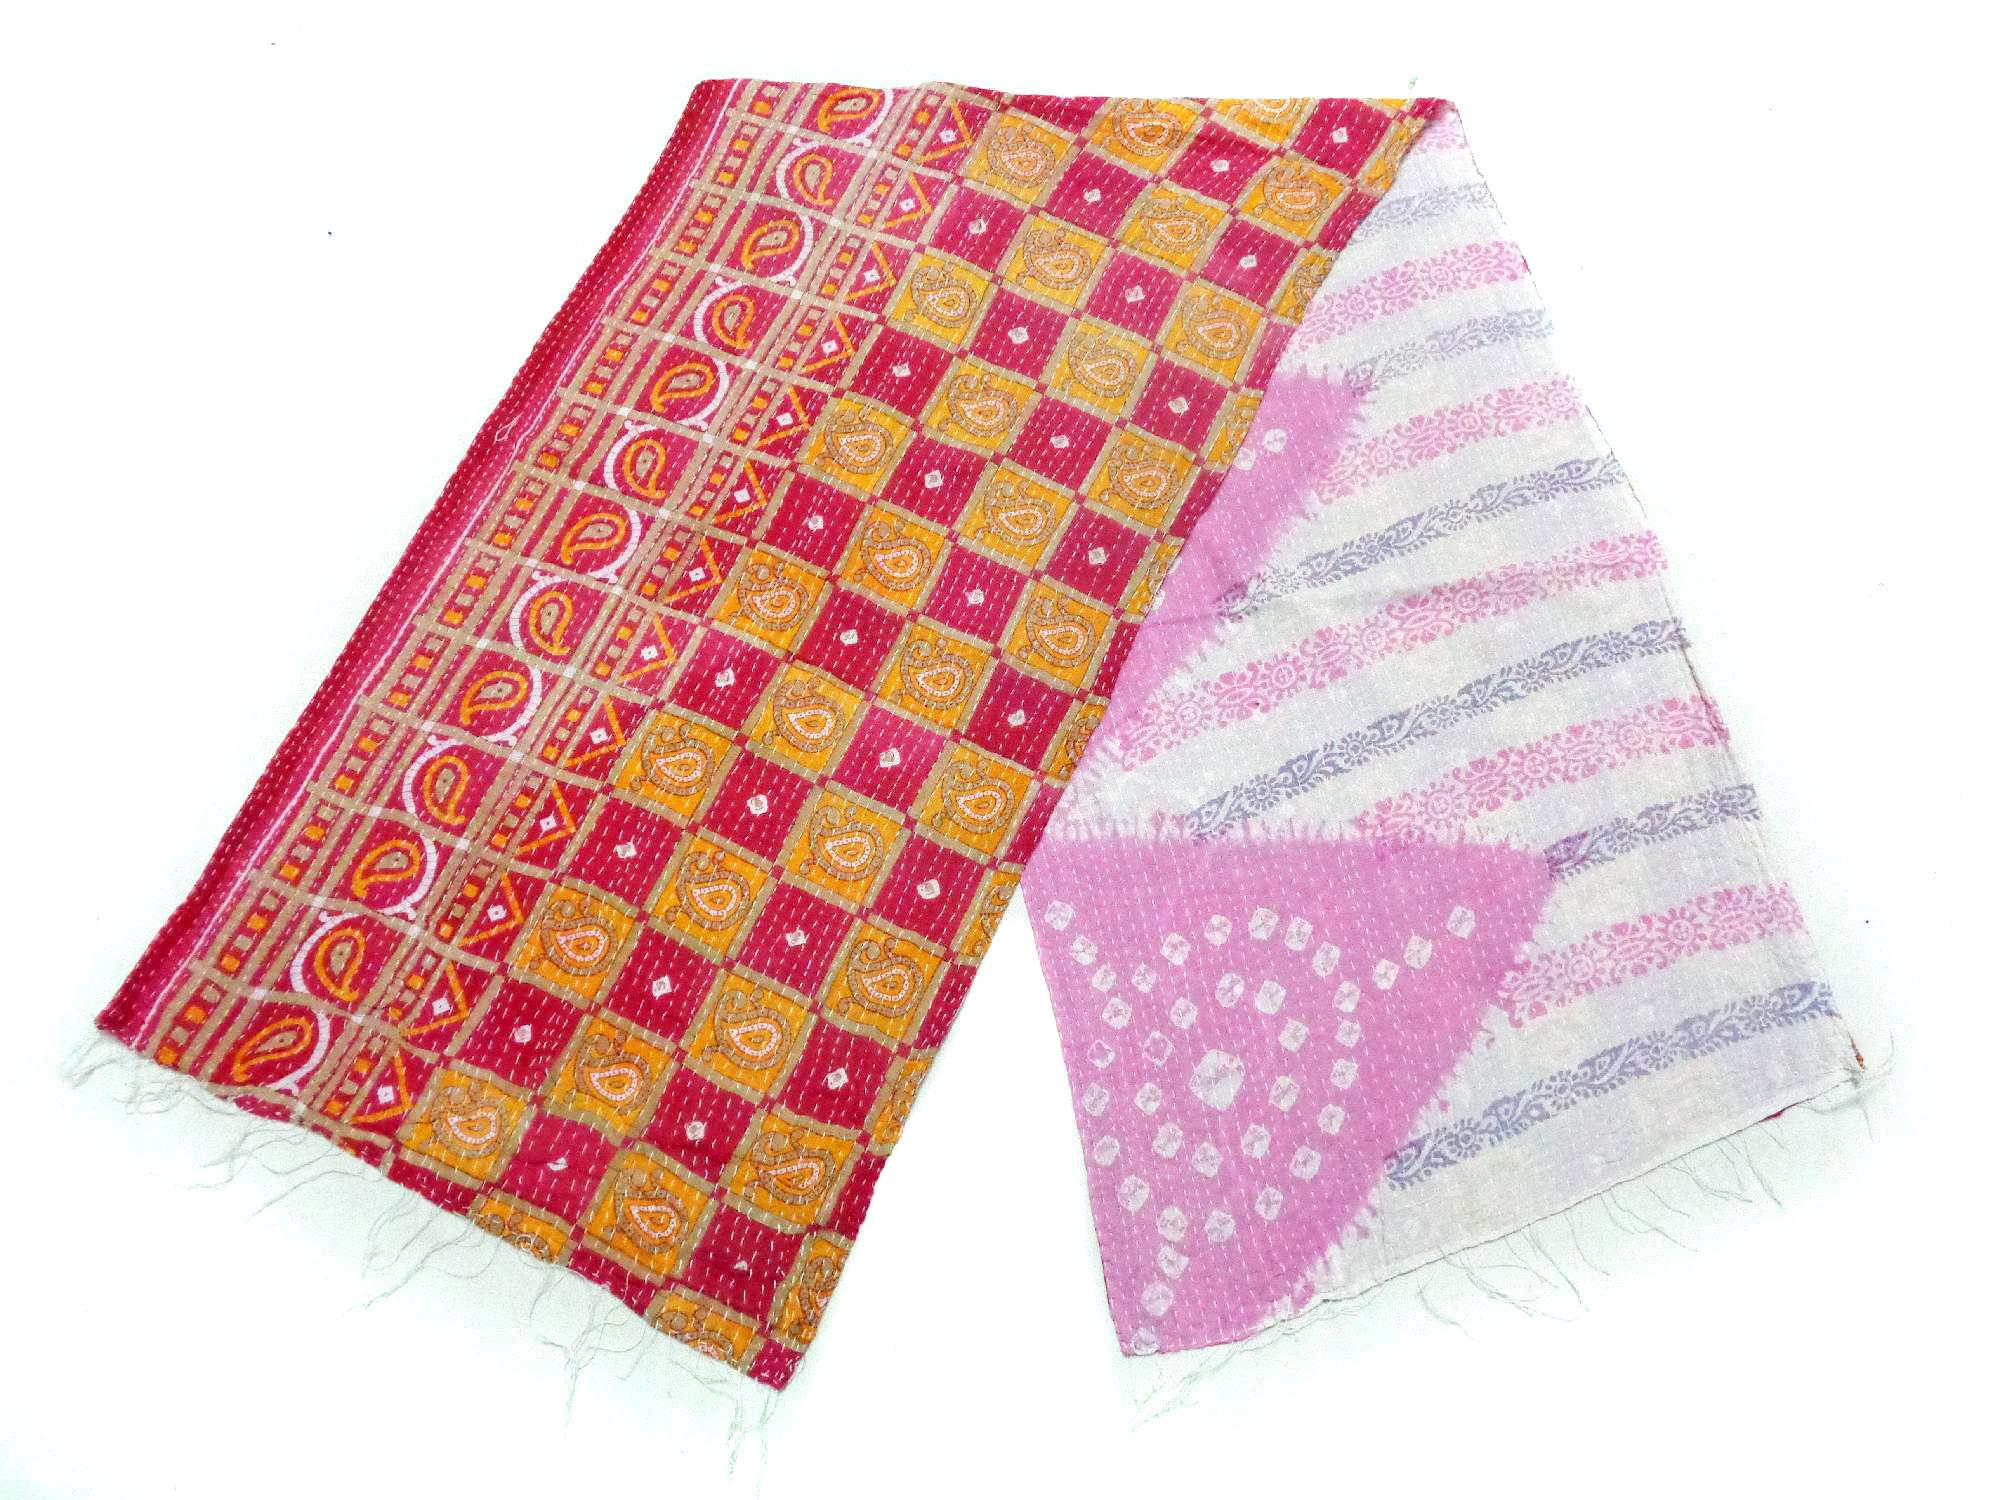 Vintage Dupatta Long Scarf Cotton Saffron Hand Embroidered Kantha Wrap Hijab SK58